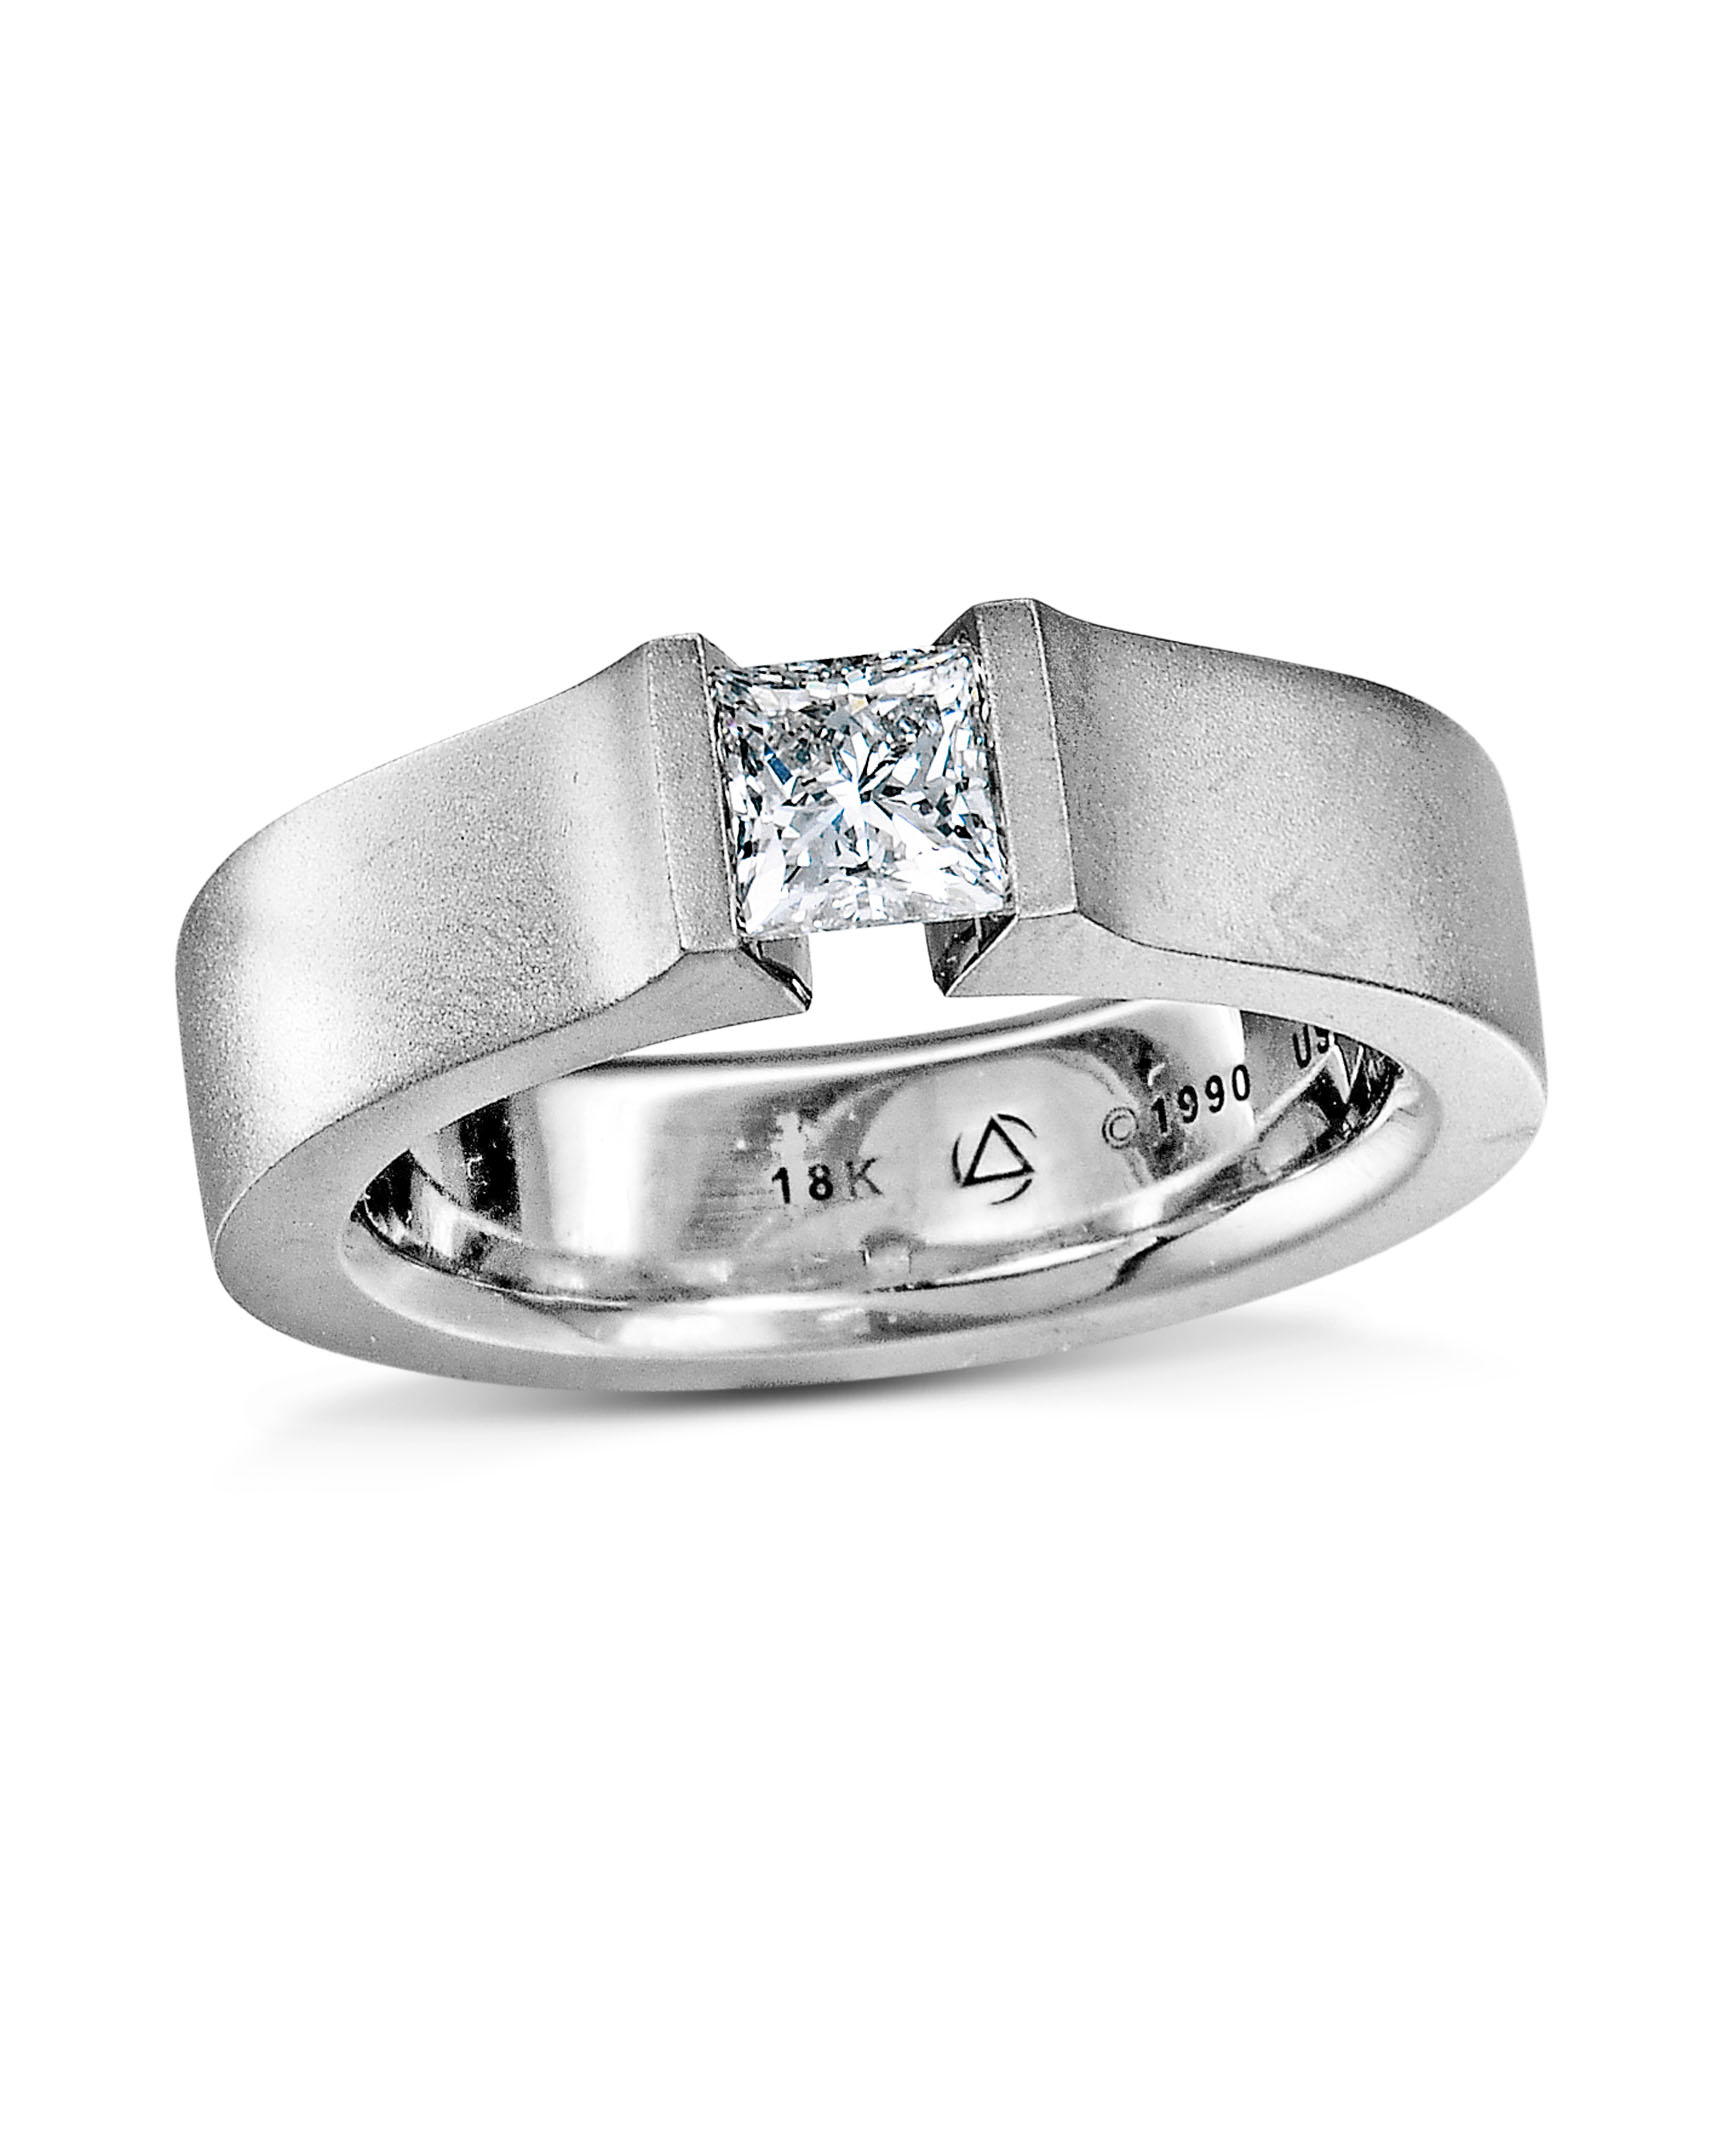 Hard Omega Tension Set Diamond Ring